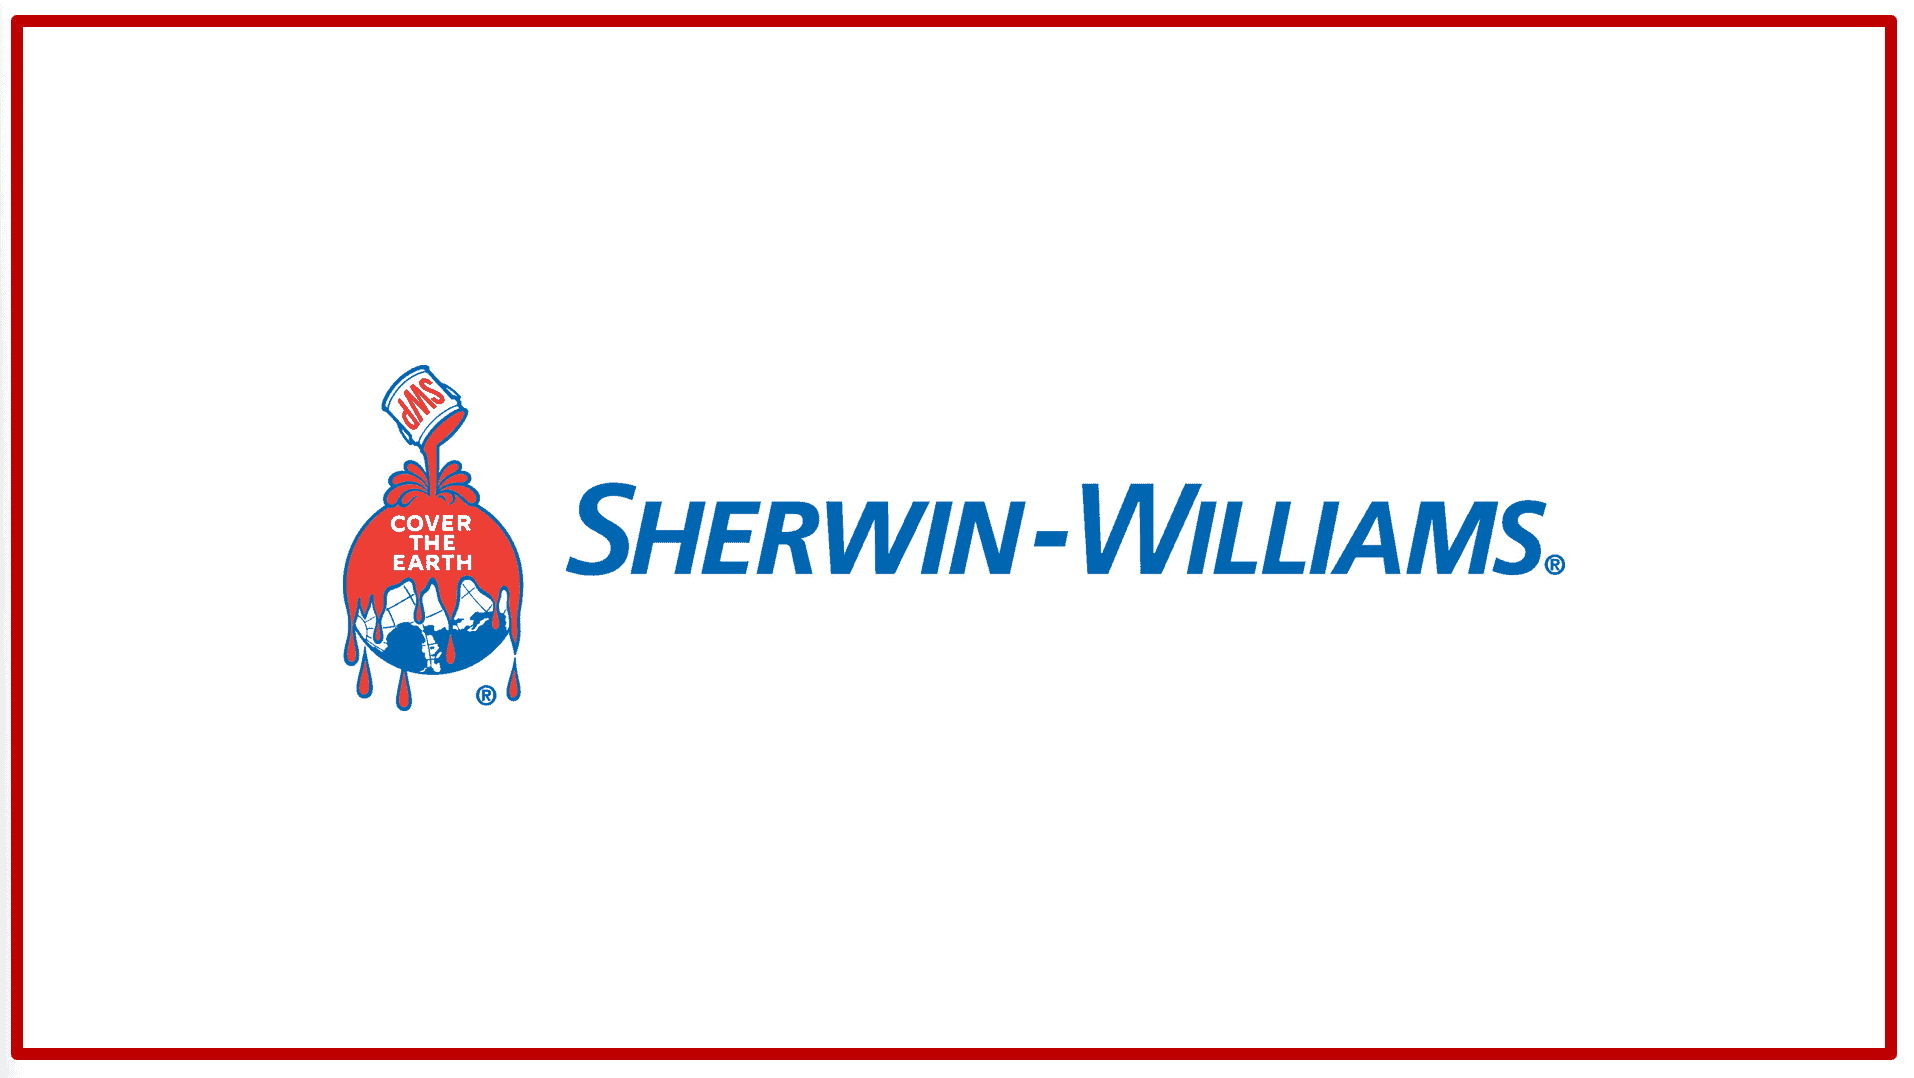 SHERWIN WILLIAMS WEBSITE LOGO